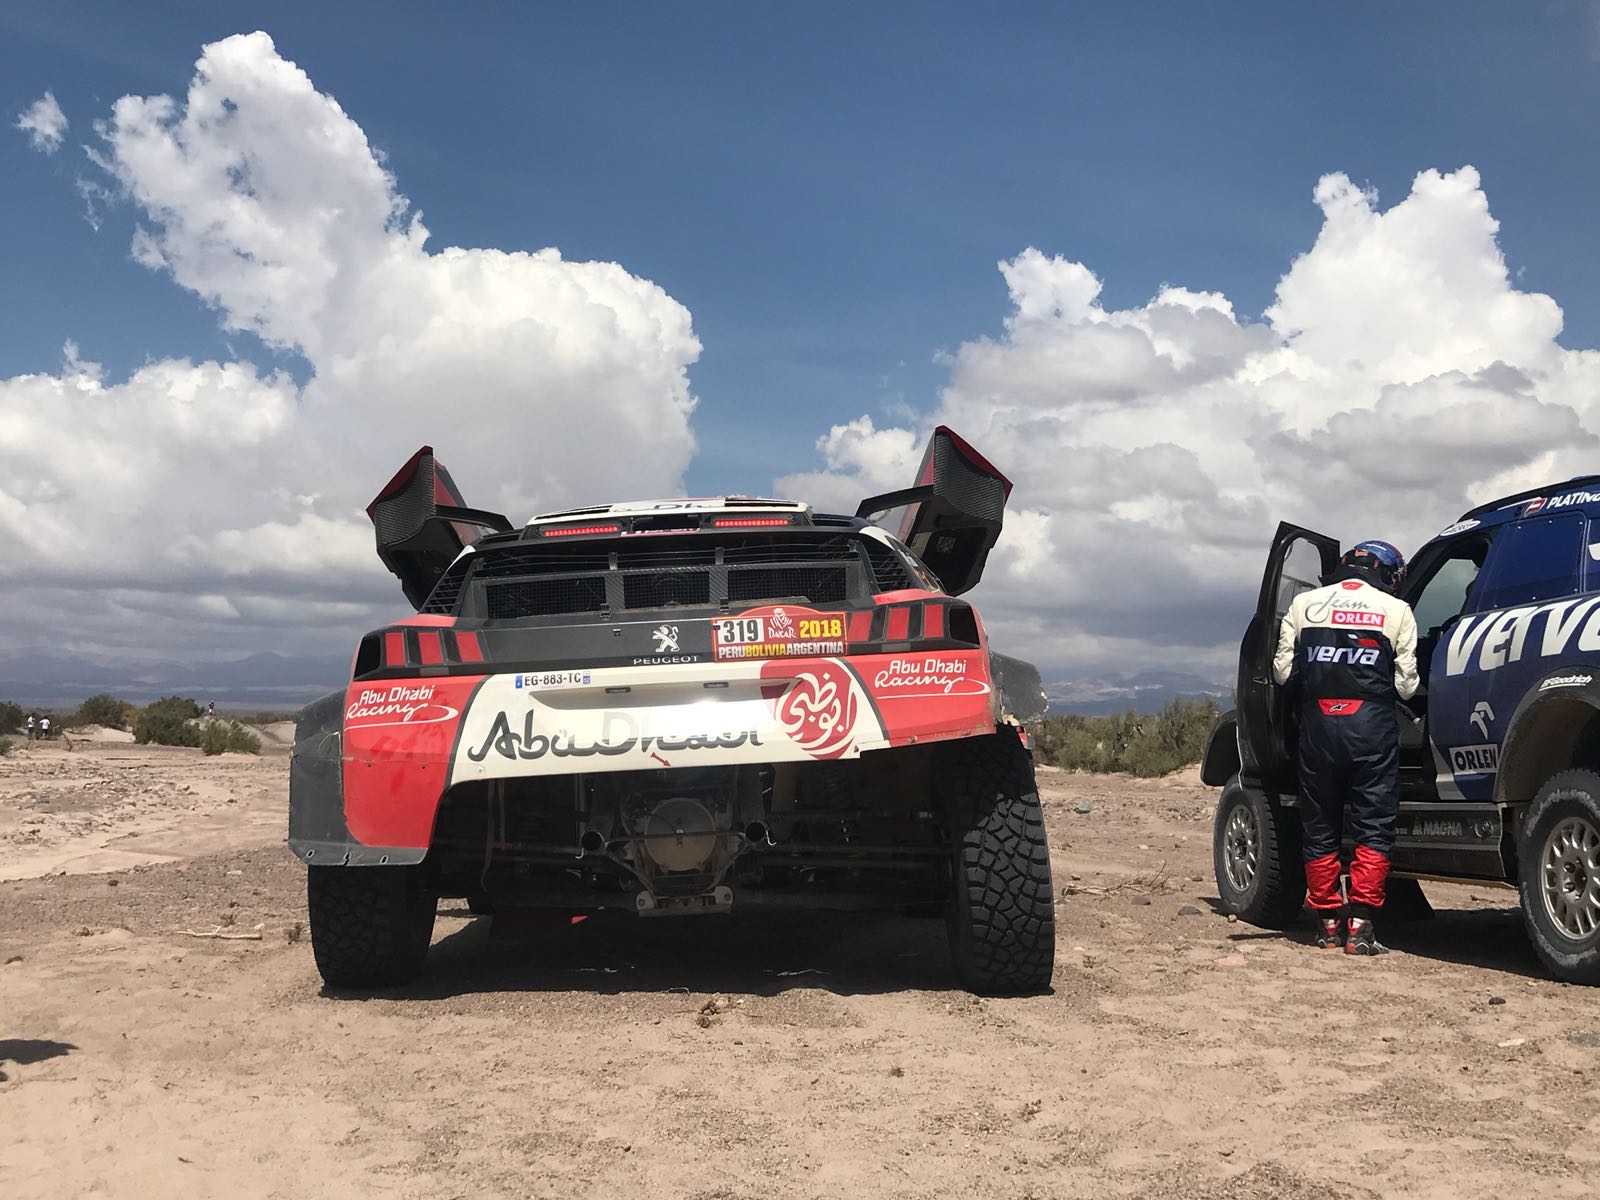 DakarRally - 2018 40º Rallye Raid Dakar Perú - Bolivia - Argentina [6-20 Enero] - Página 21 DTwFy0FW0AA_BHu